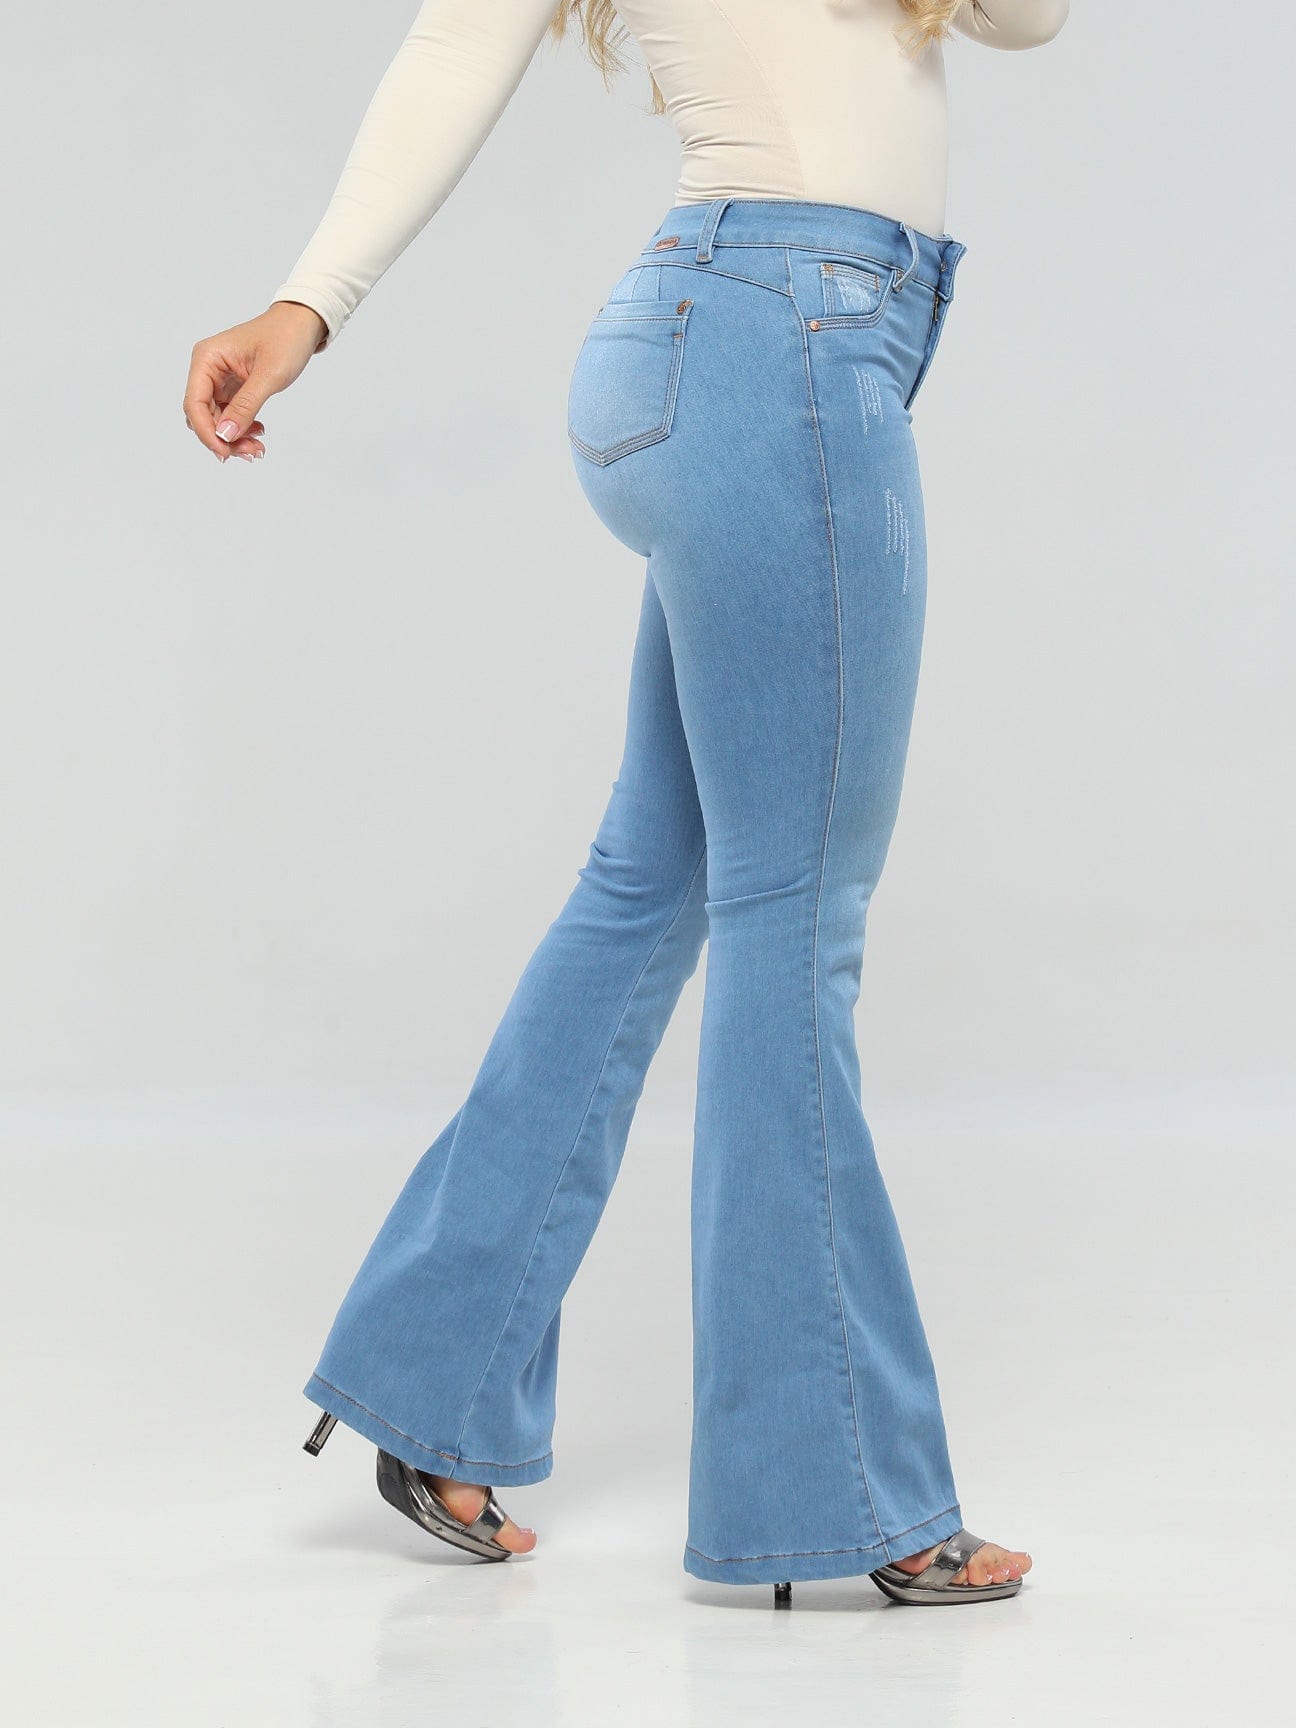 Adventure Colombian Jeans for Women Pantalones Kuwait